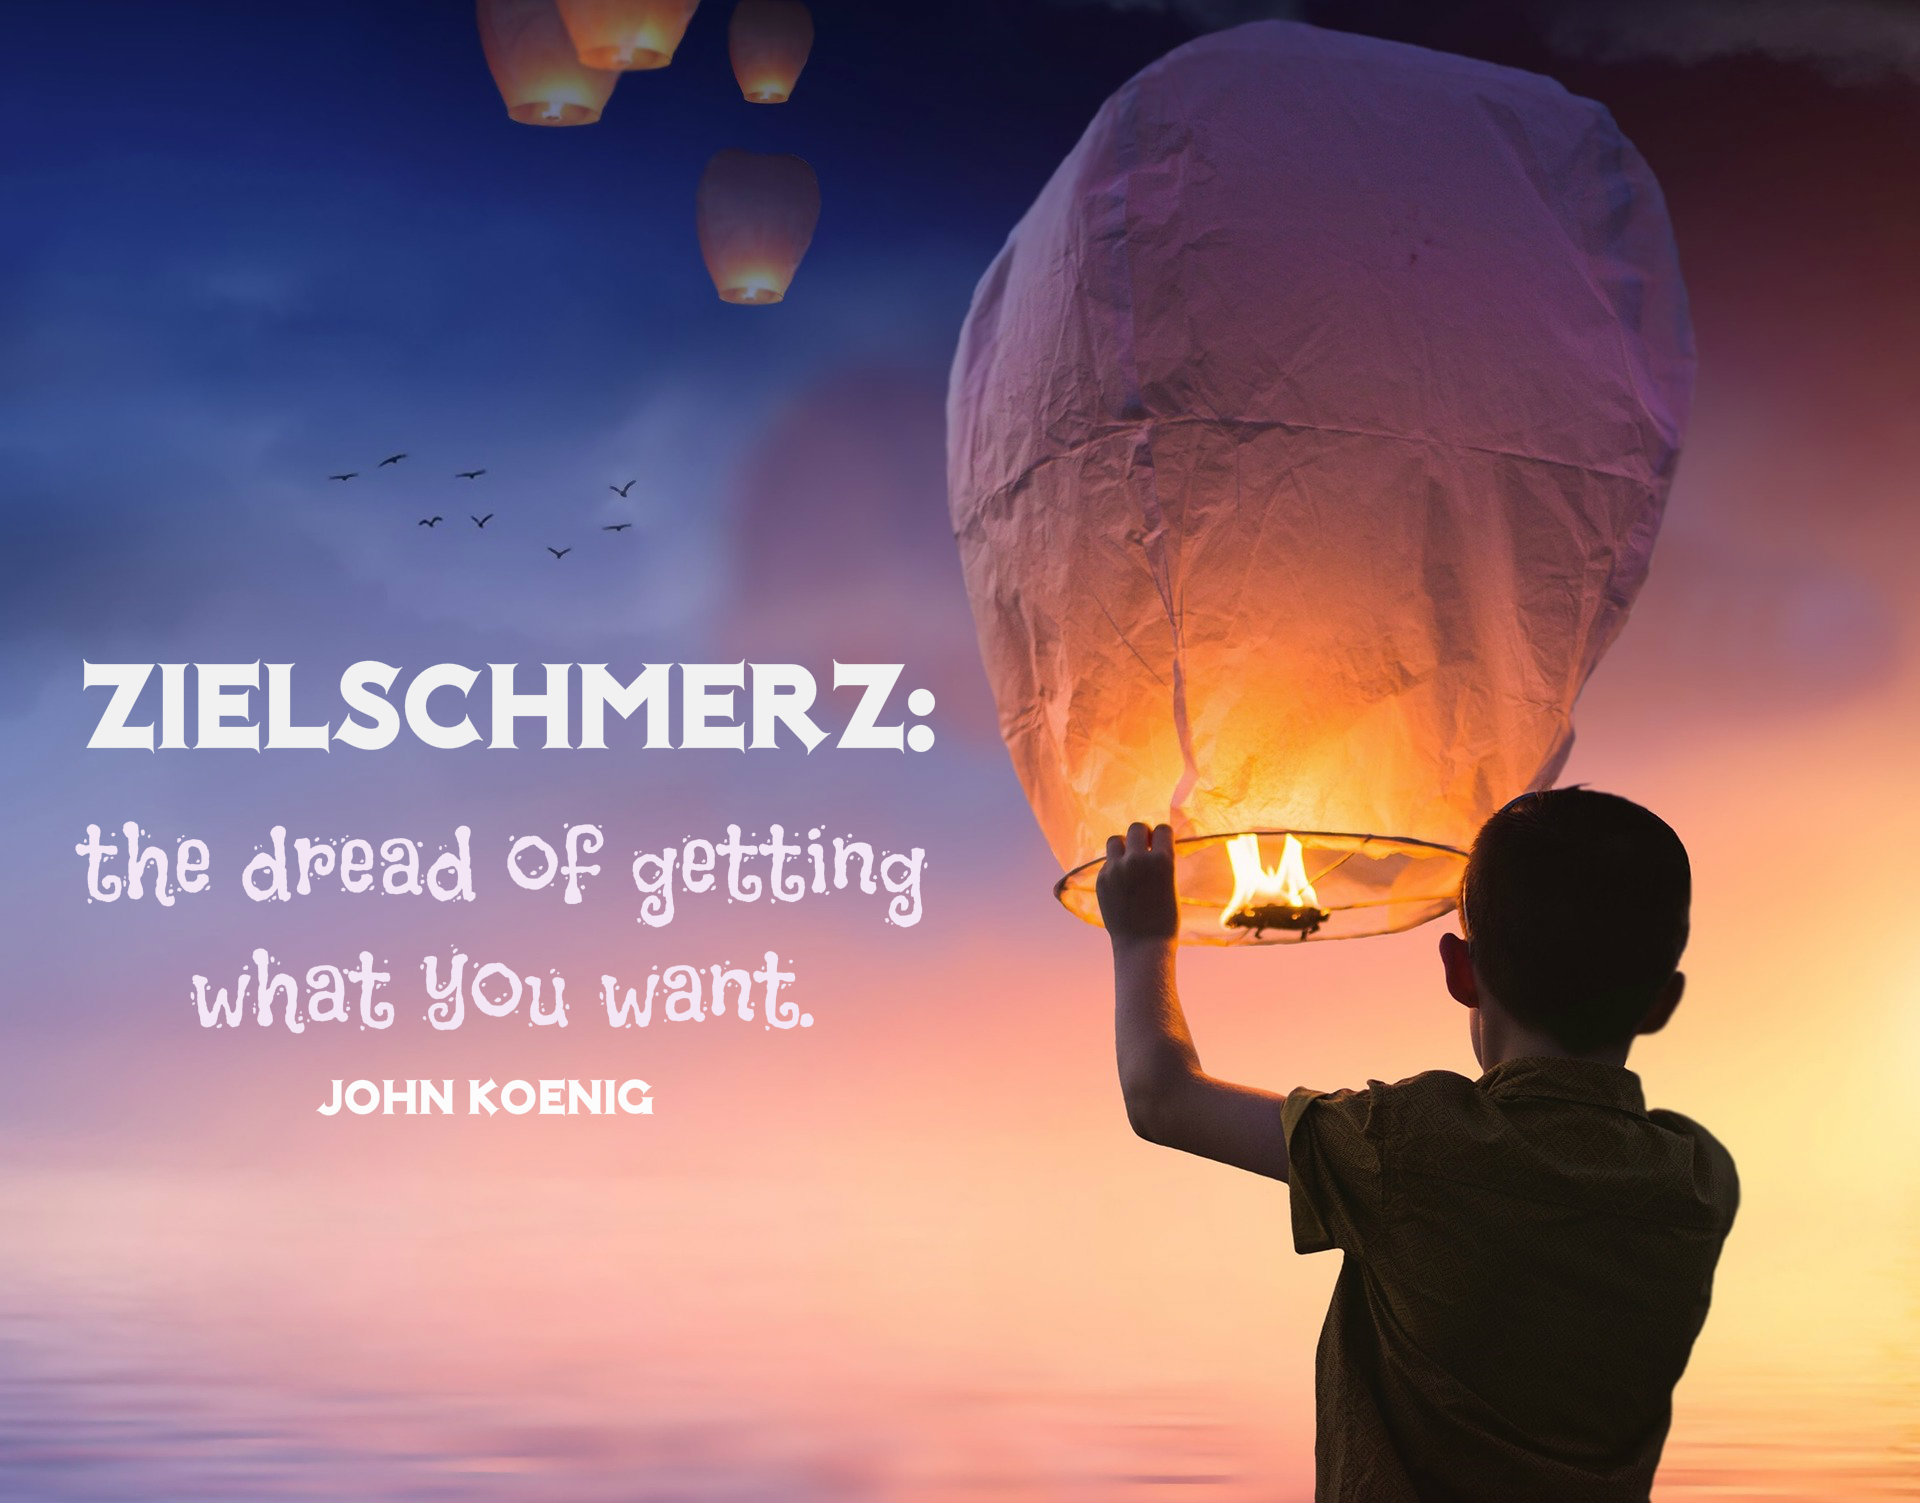 Zielschmerz: the dread of getting what you want. John Koenig. On blog about TEDxWinnipeg 2018